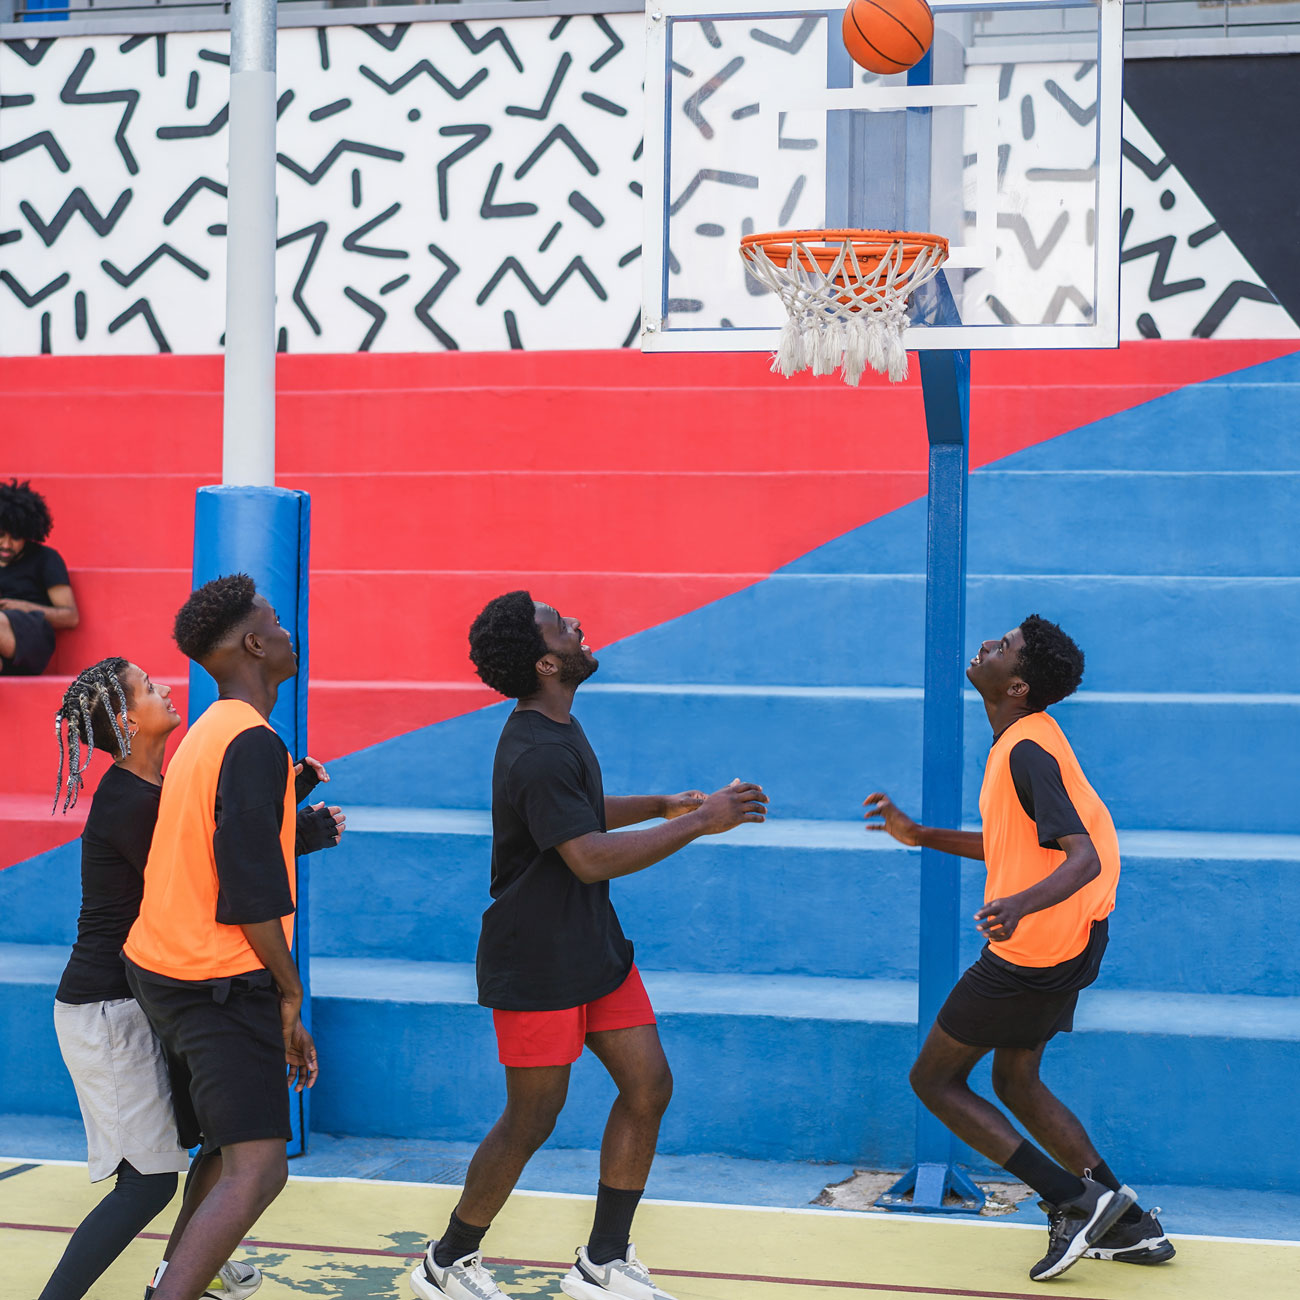 african-friends-playing-basketball-outdoor-focus-2022-04-29-00-30-00-utc